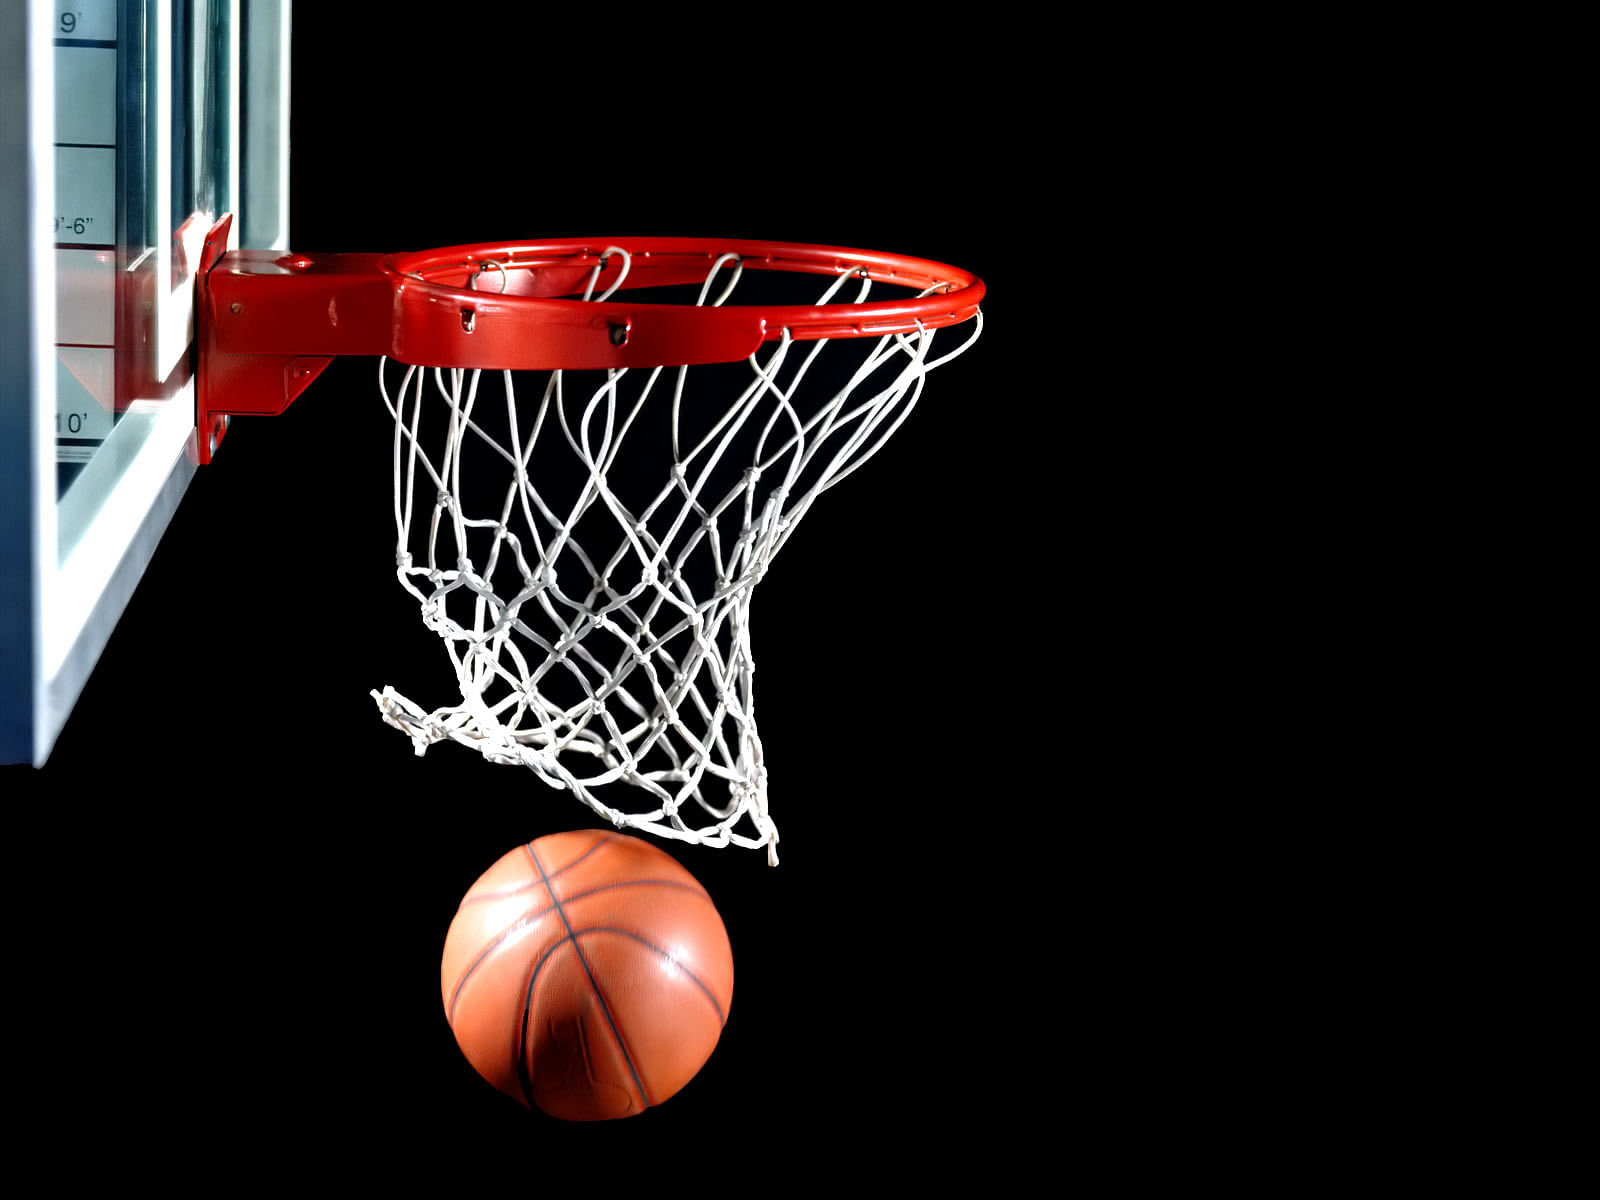 Federation Cup Basketball: ONGC, Tamil Nadu basket titles